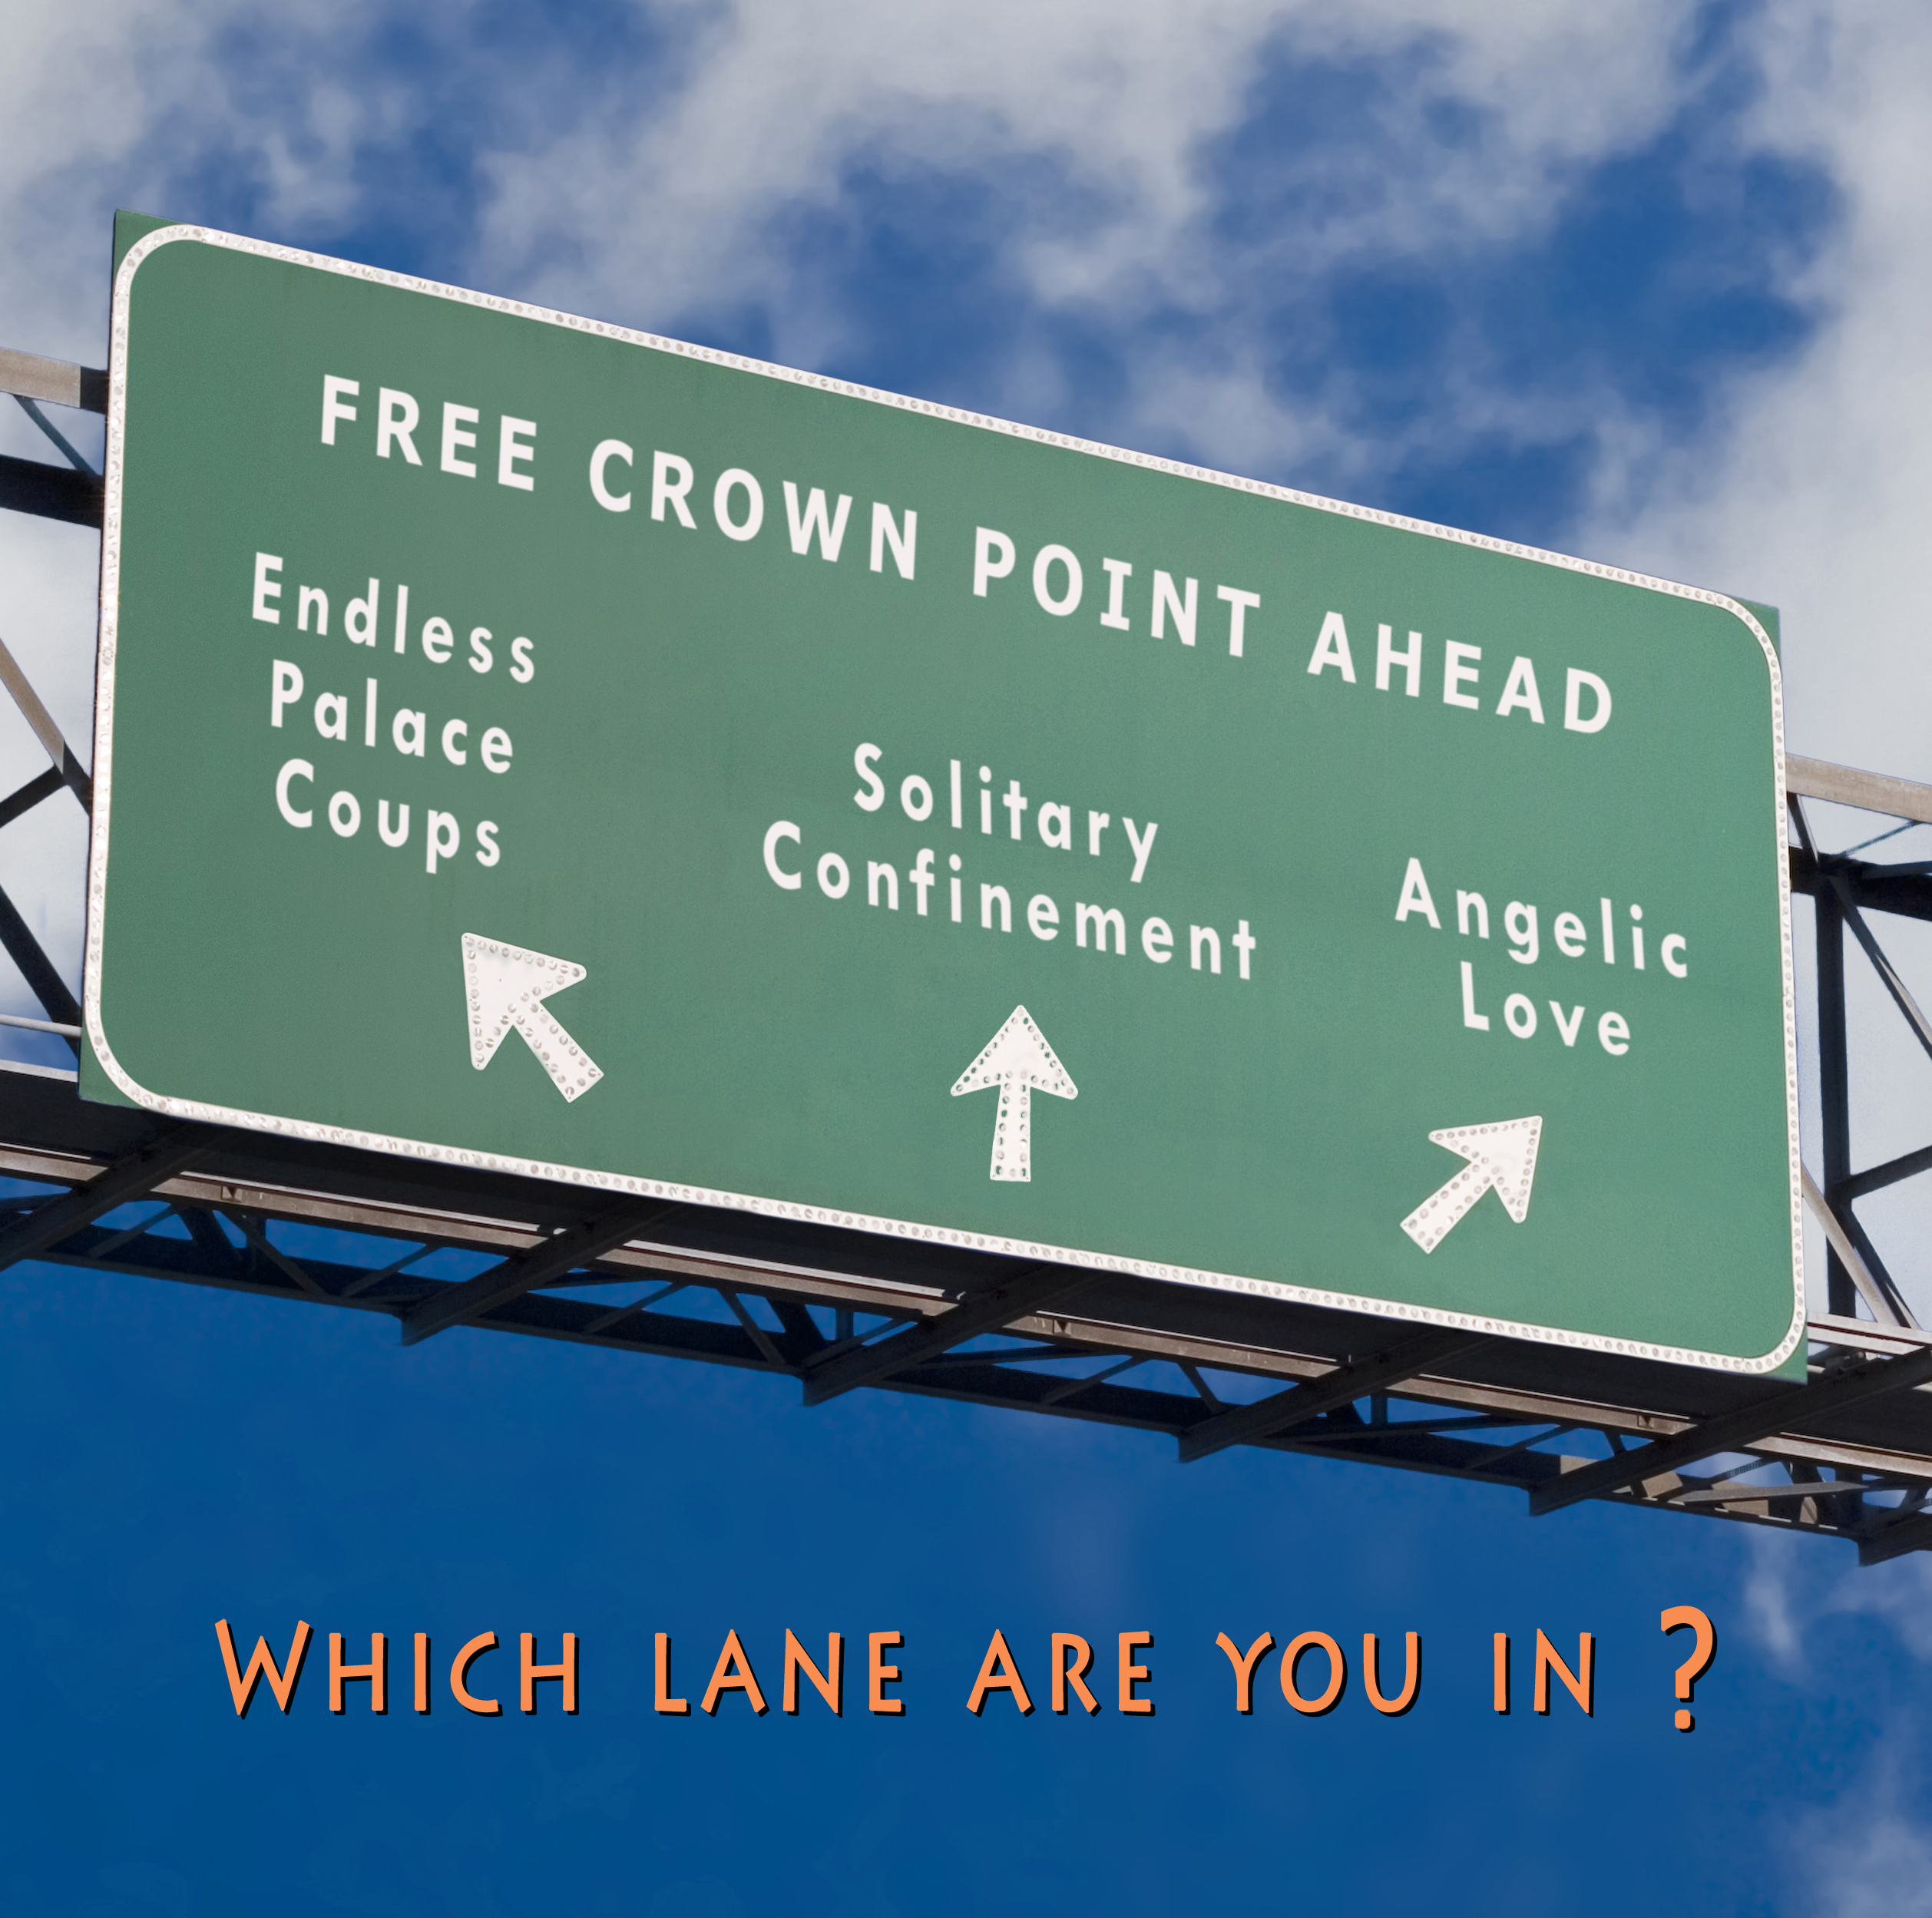 Free Crown Point Ahead Sign Mark Plain